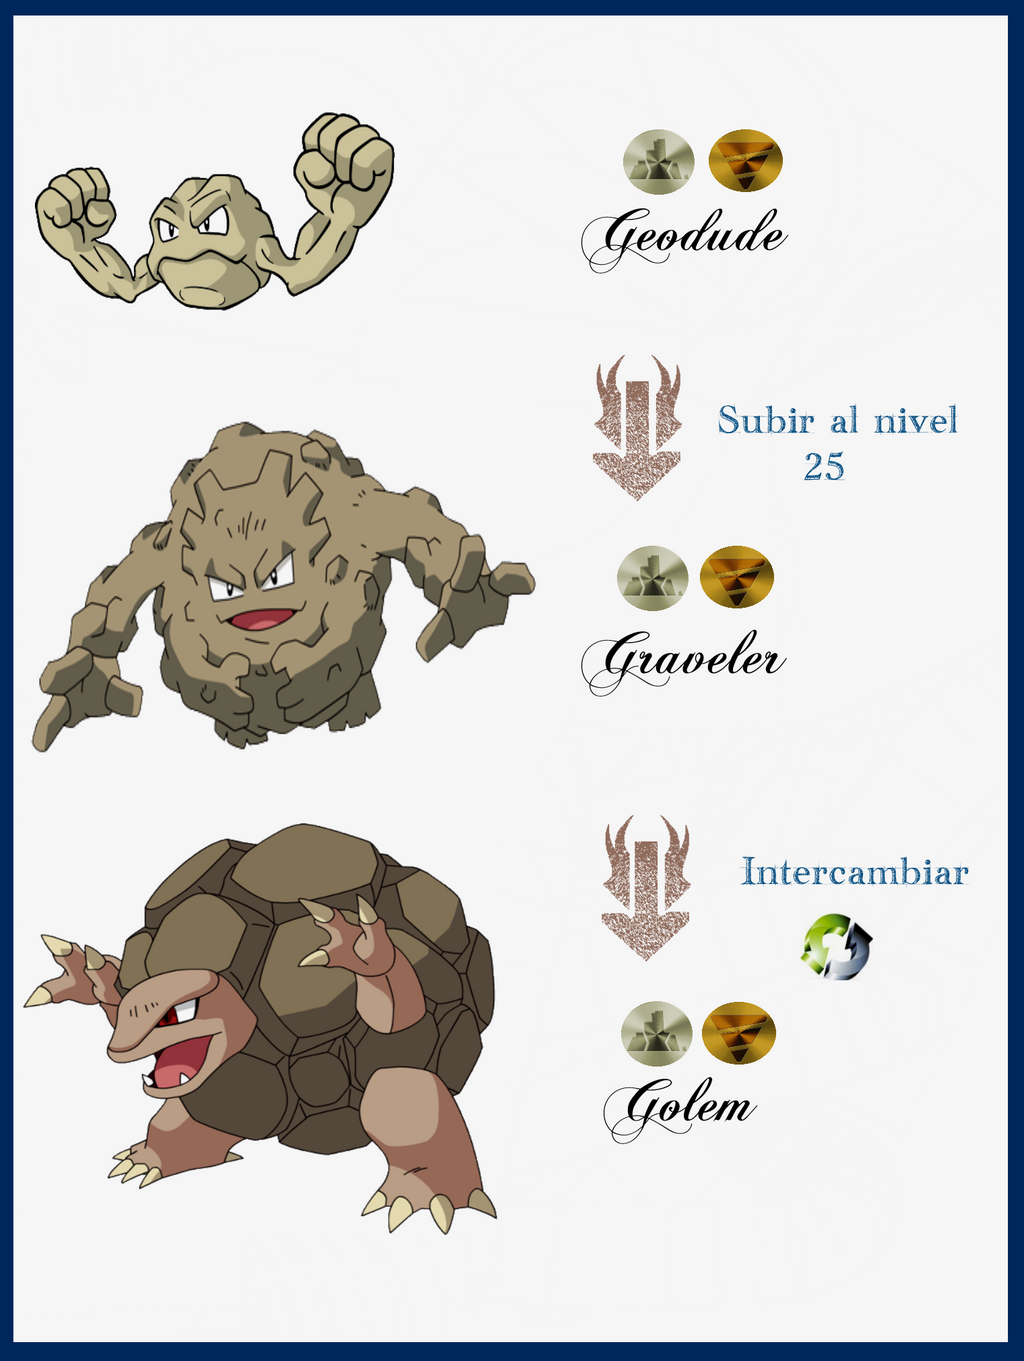 Golem Evolution Chart